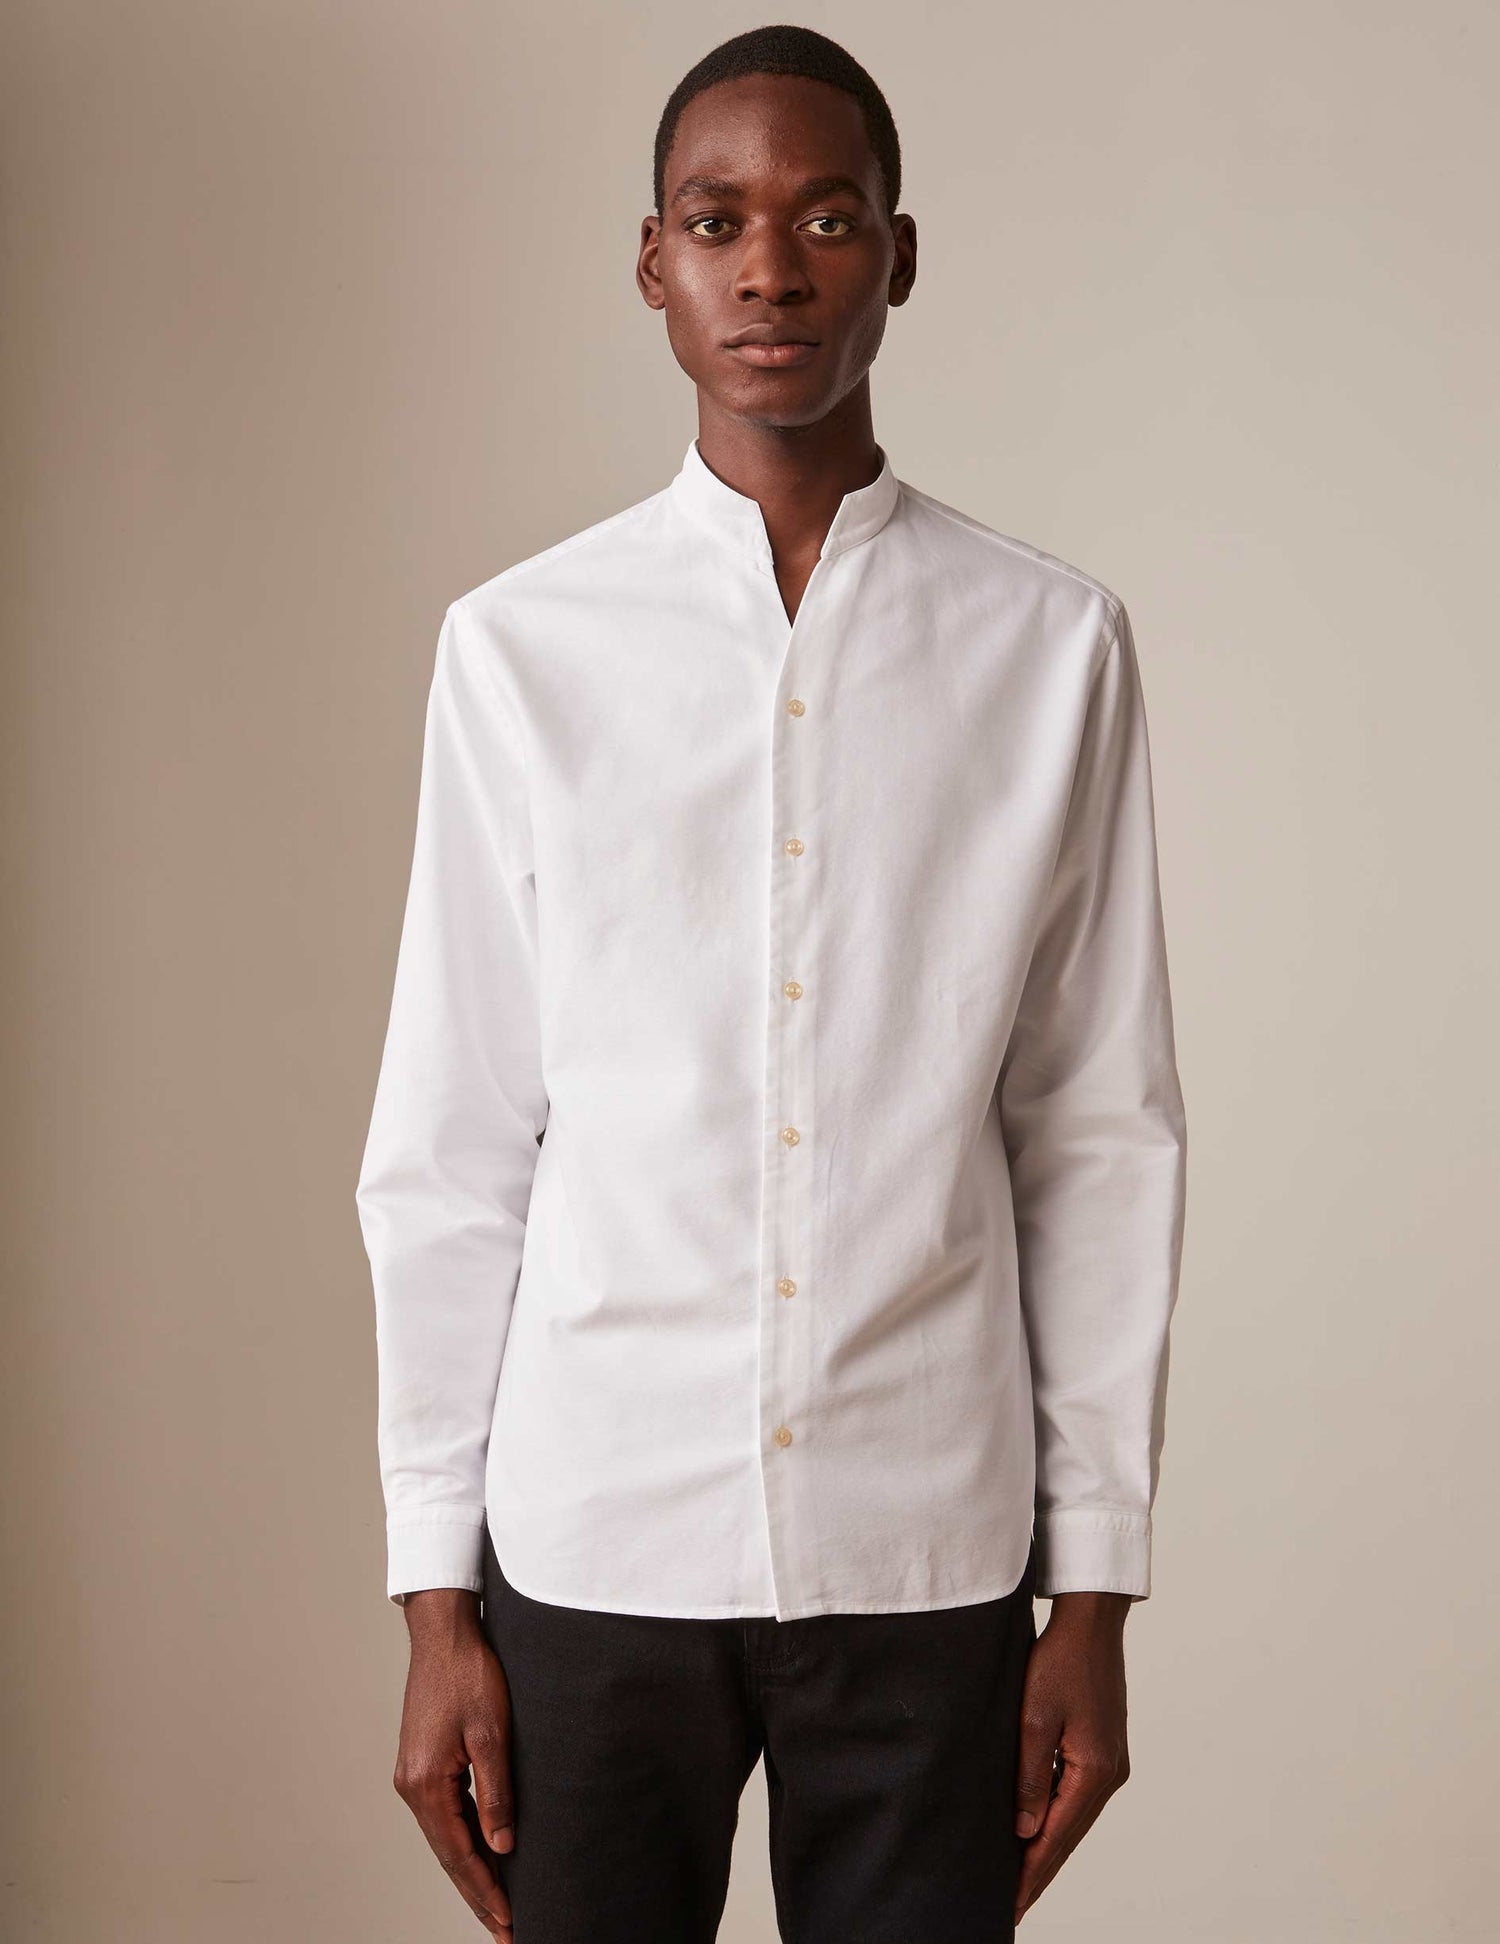 White Carl shirt - Oxford - Open straight Collar#3